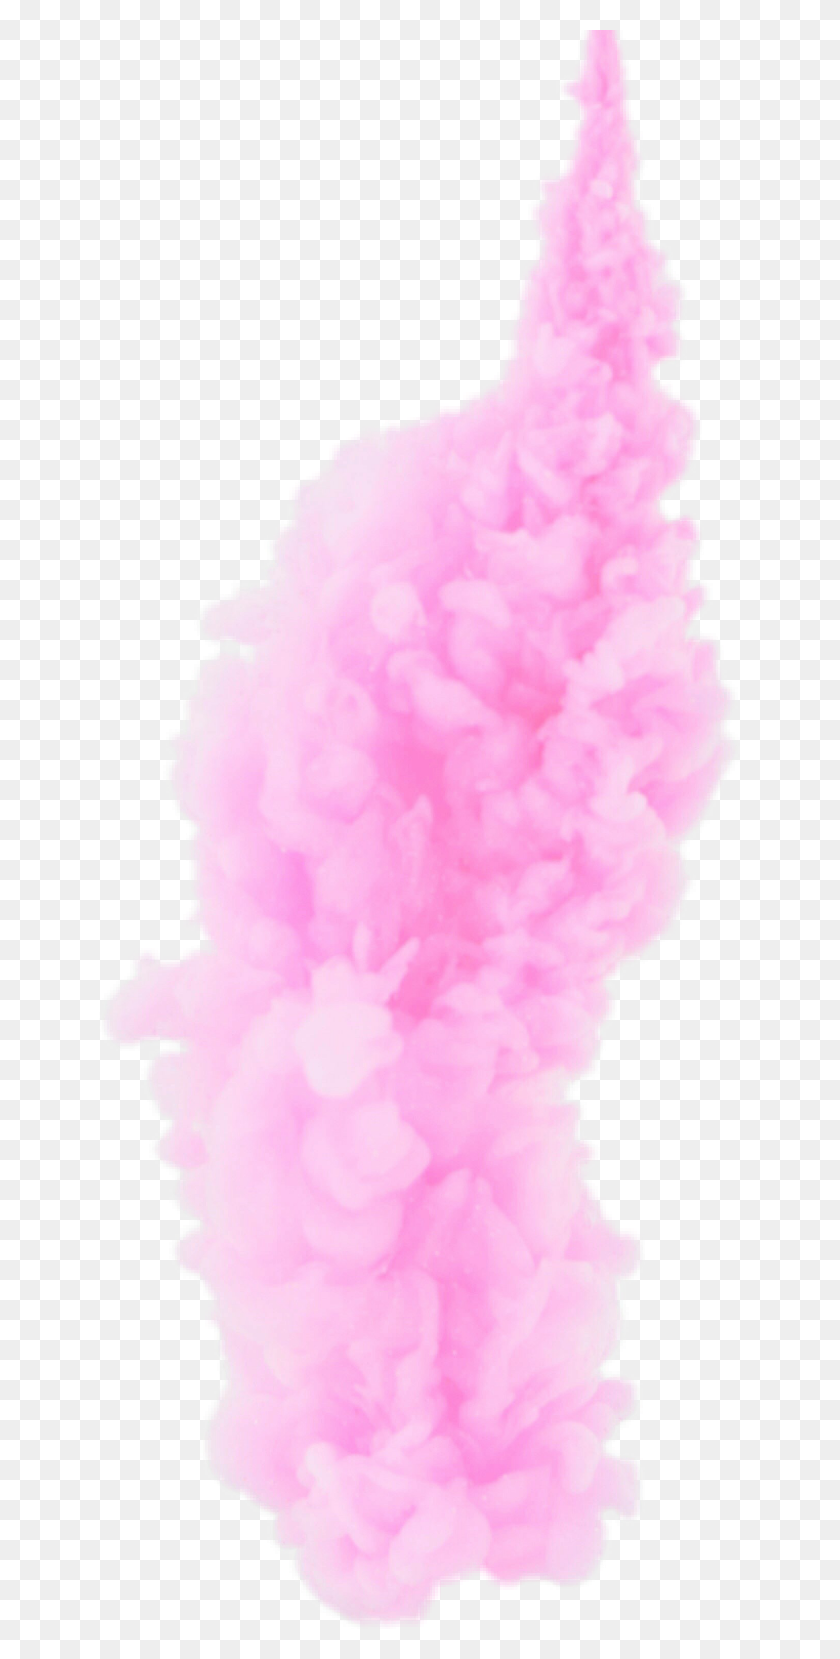 641x1599 Smoke Humo Pink Purple Tumblr Agua Water Rosado - Humo PNG